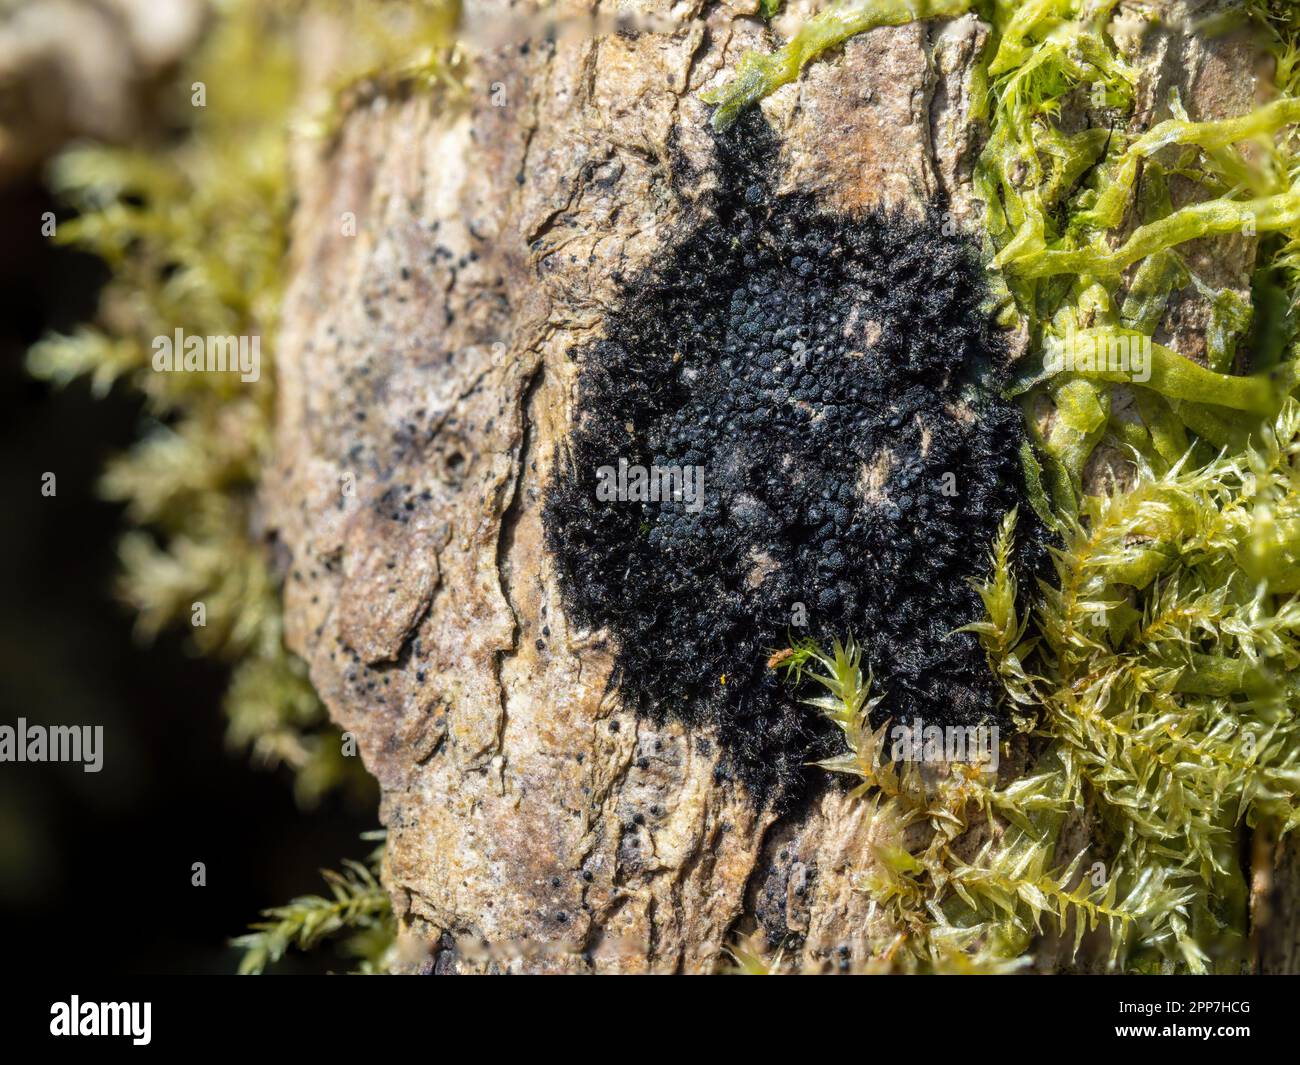 Chaetosphaerella phaeostroma black fungus, uk. Stock Photo